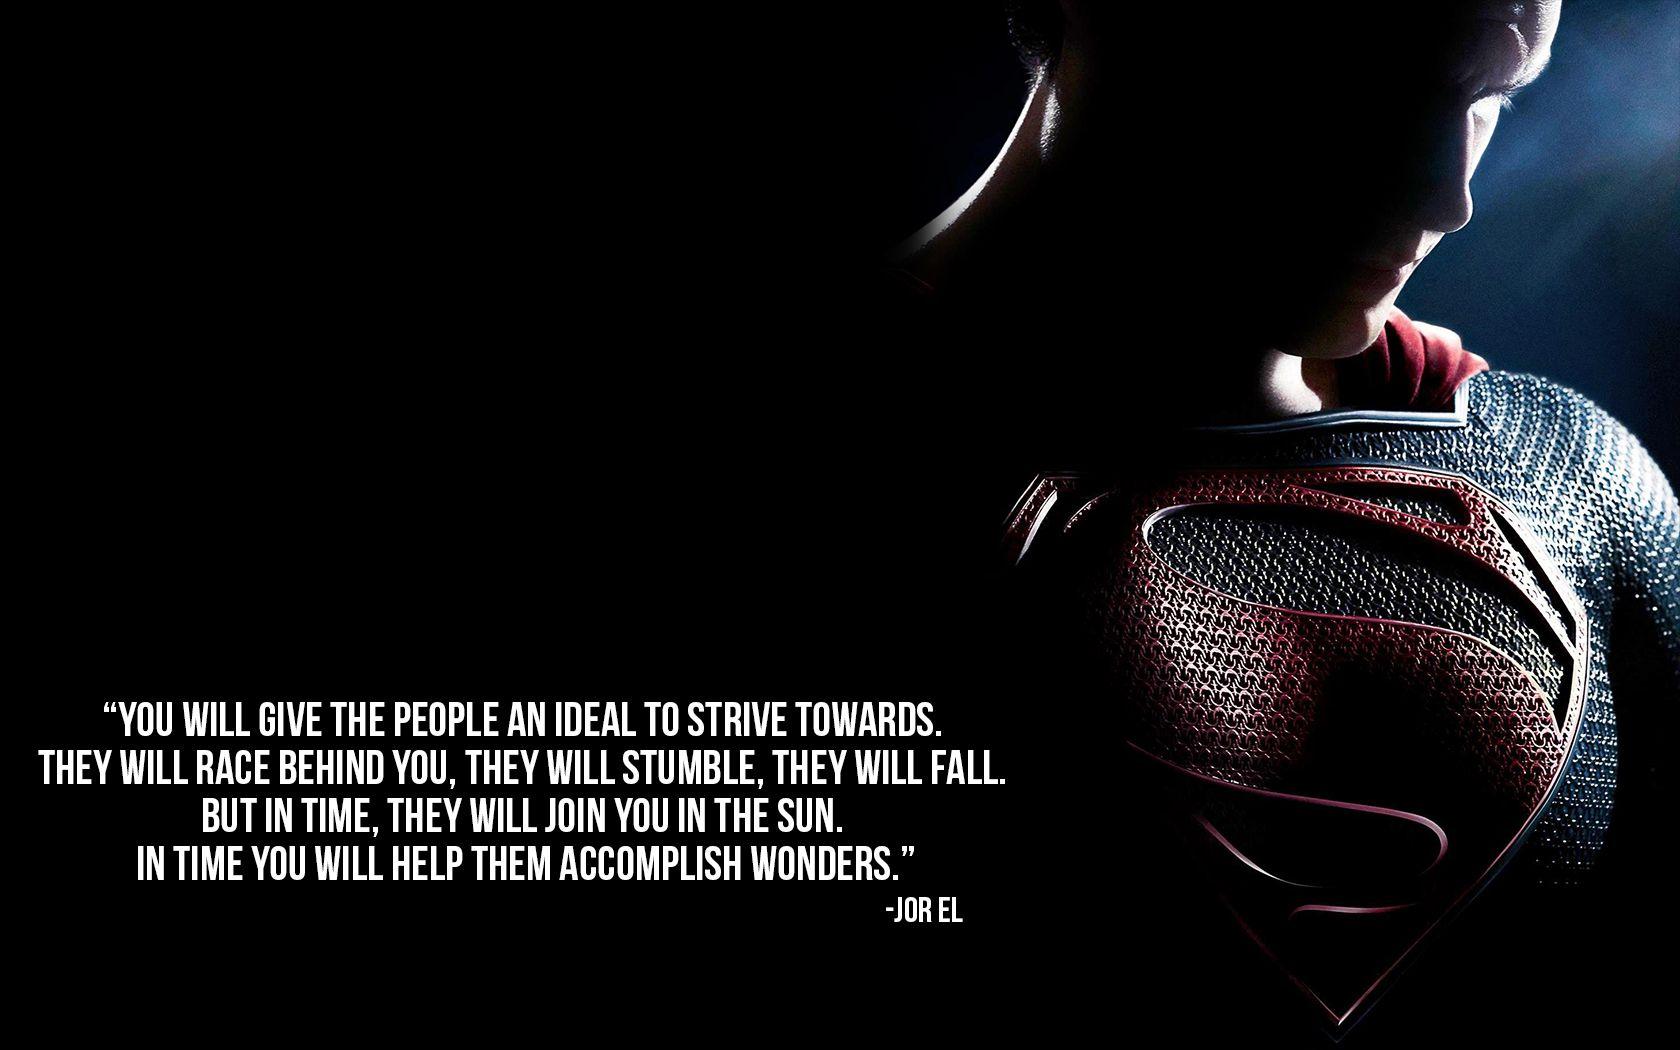 superman quotes inspirational